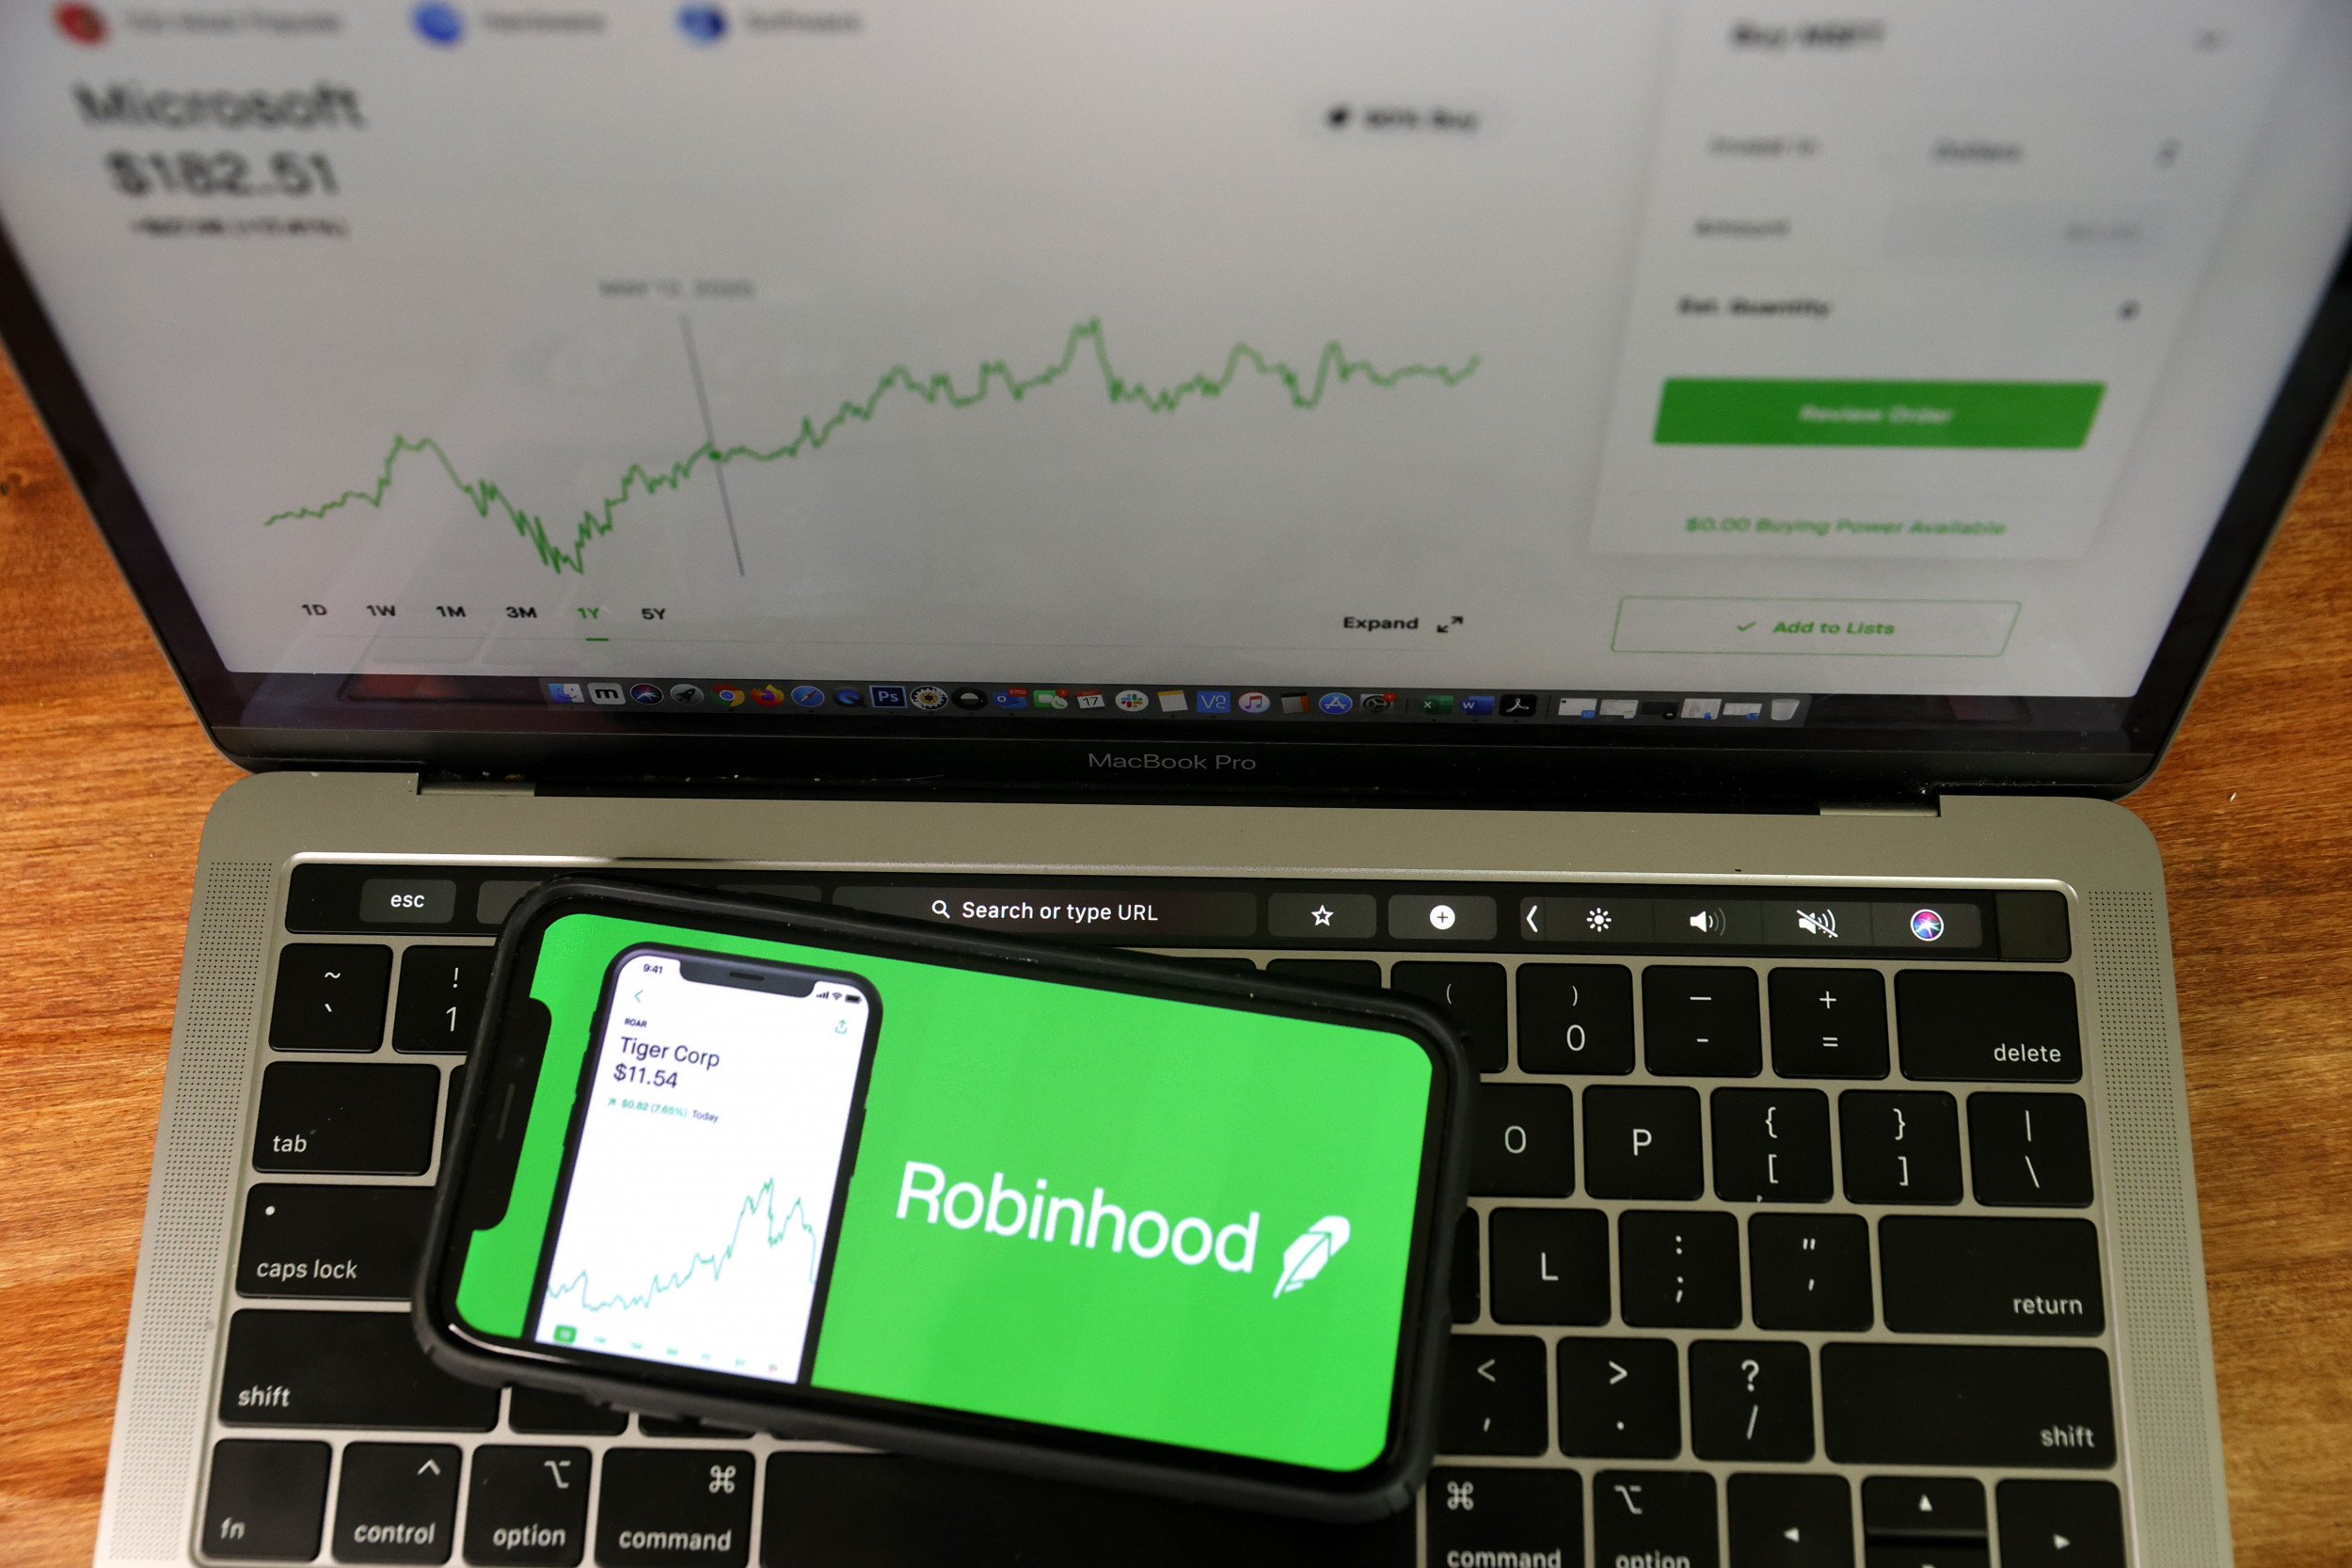 Robinhood, Reddit App Downloads Surge as Investors Take on Wall Street